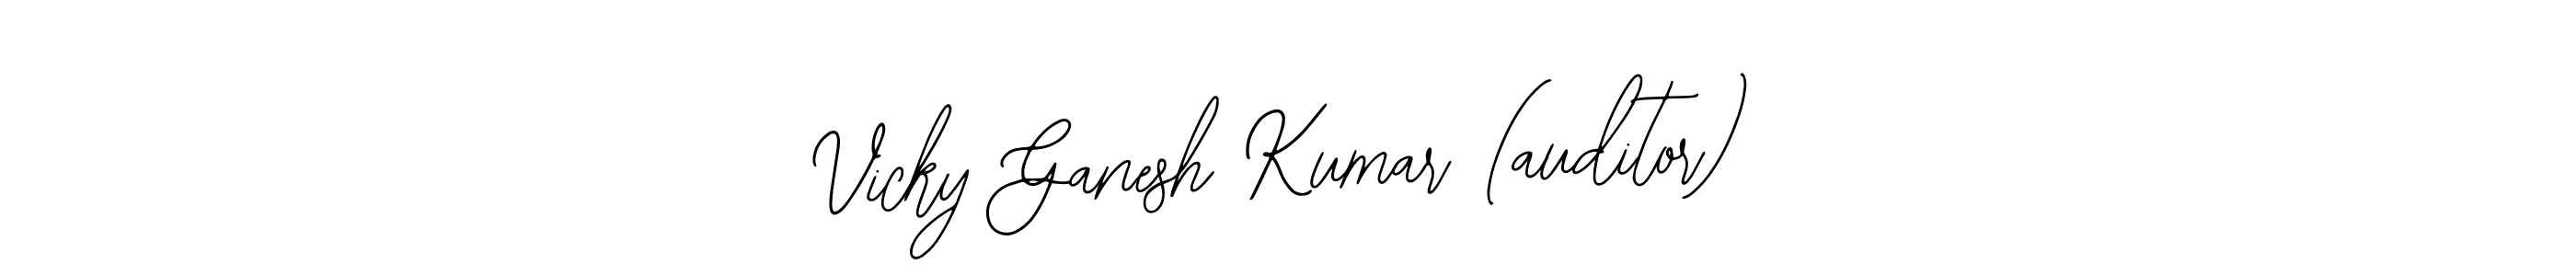 Vicky Ganesh Kumar (auditor) stylish signature style. Best Handwritten Sign (Bearetta-2O07w) for my name. Handwritten Signature Collection Ideas for my name Vicky Ganesh Kumar (auditor). Vicky Ganesh Kumar (auditor) signature style 12 images and pictures png